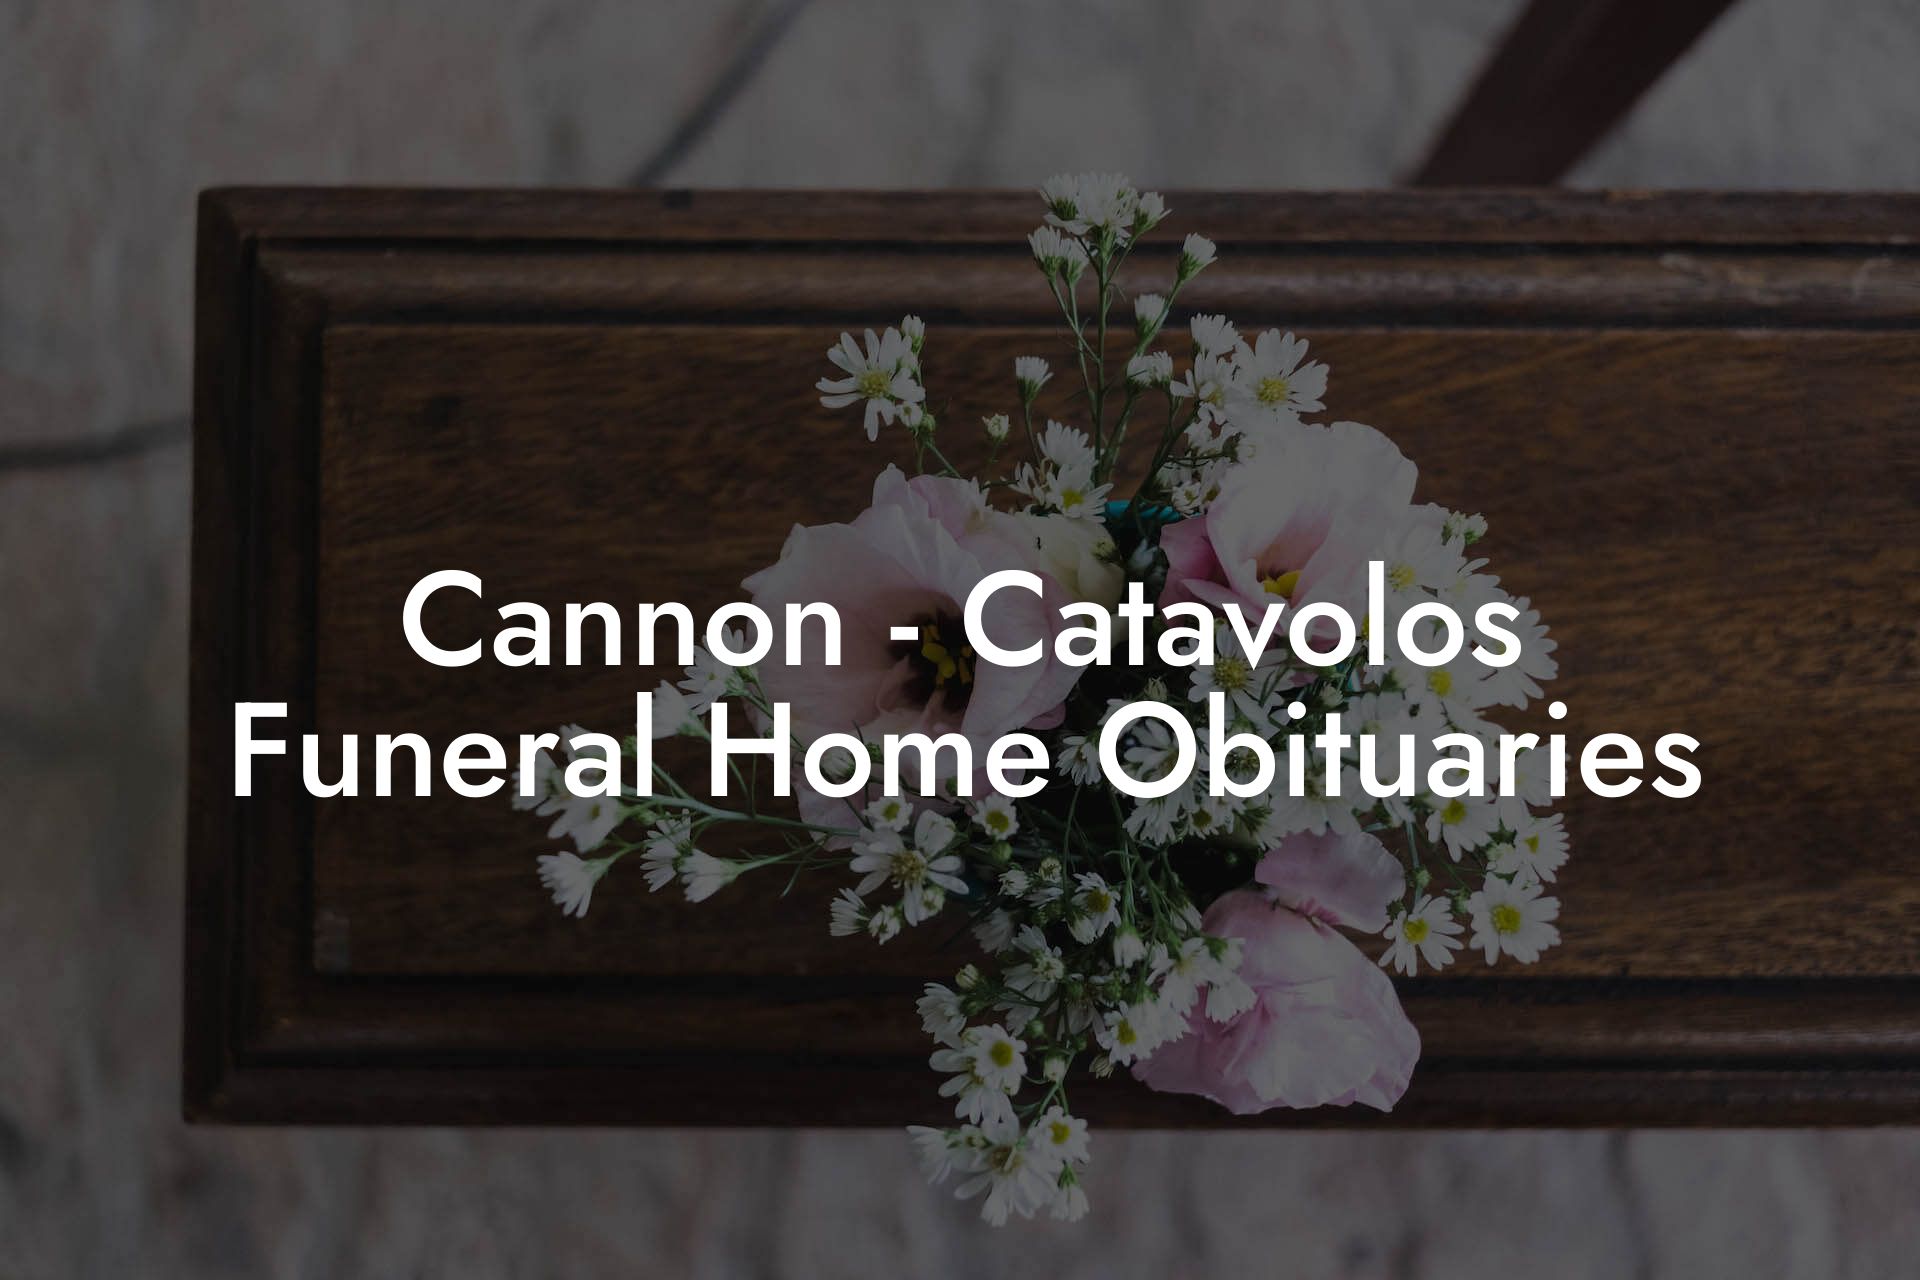 Cannon - Catavolos Funeral Home Obituaries